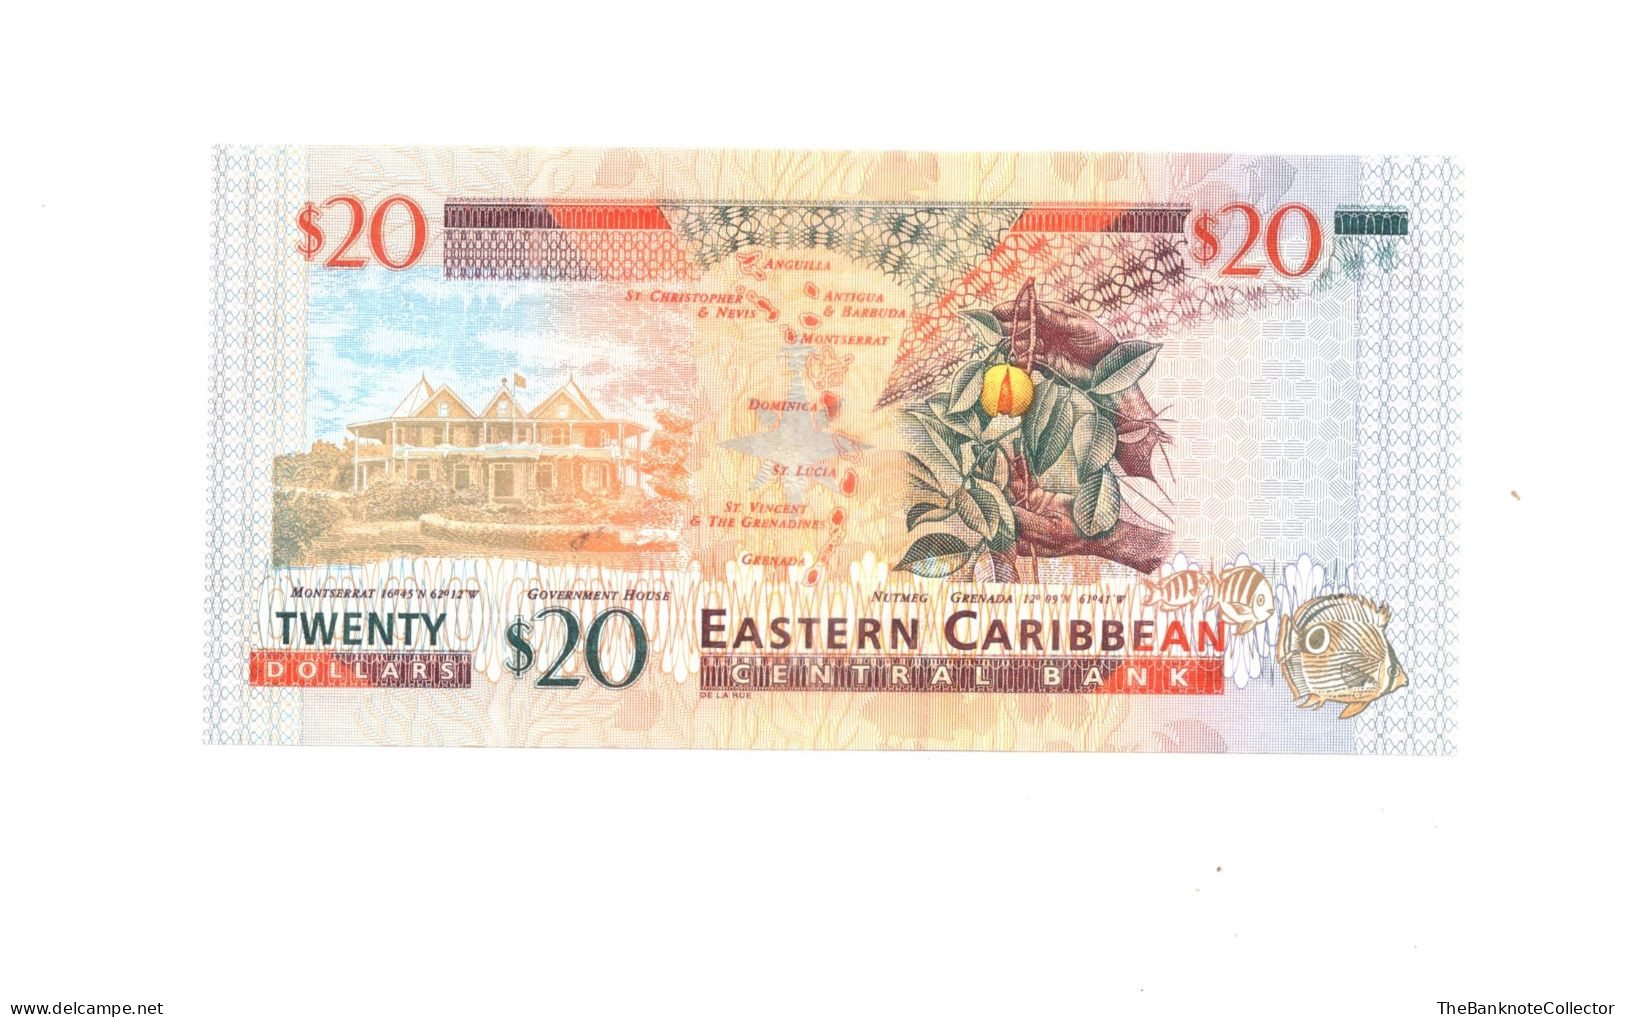 Eastern Caribbean Central Bank 20 Dollars ND 2003 QEII P-44v UNC - East Carribeans